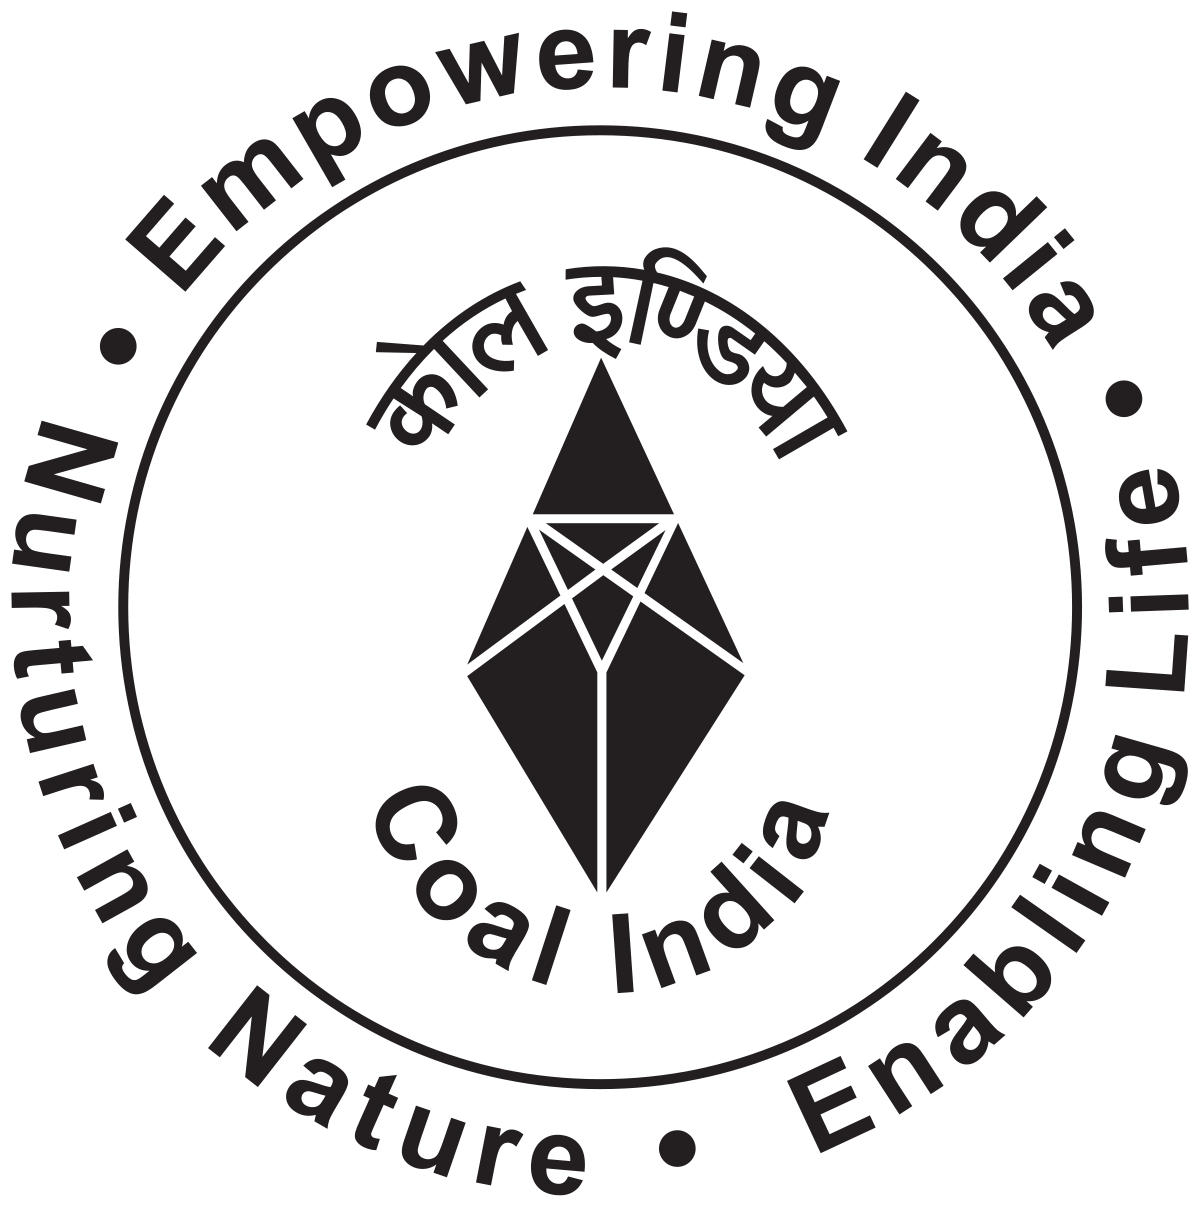 Coal India Buyback 2019 InvestorZone